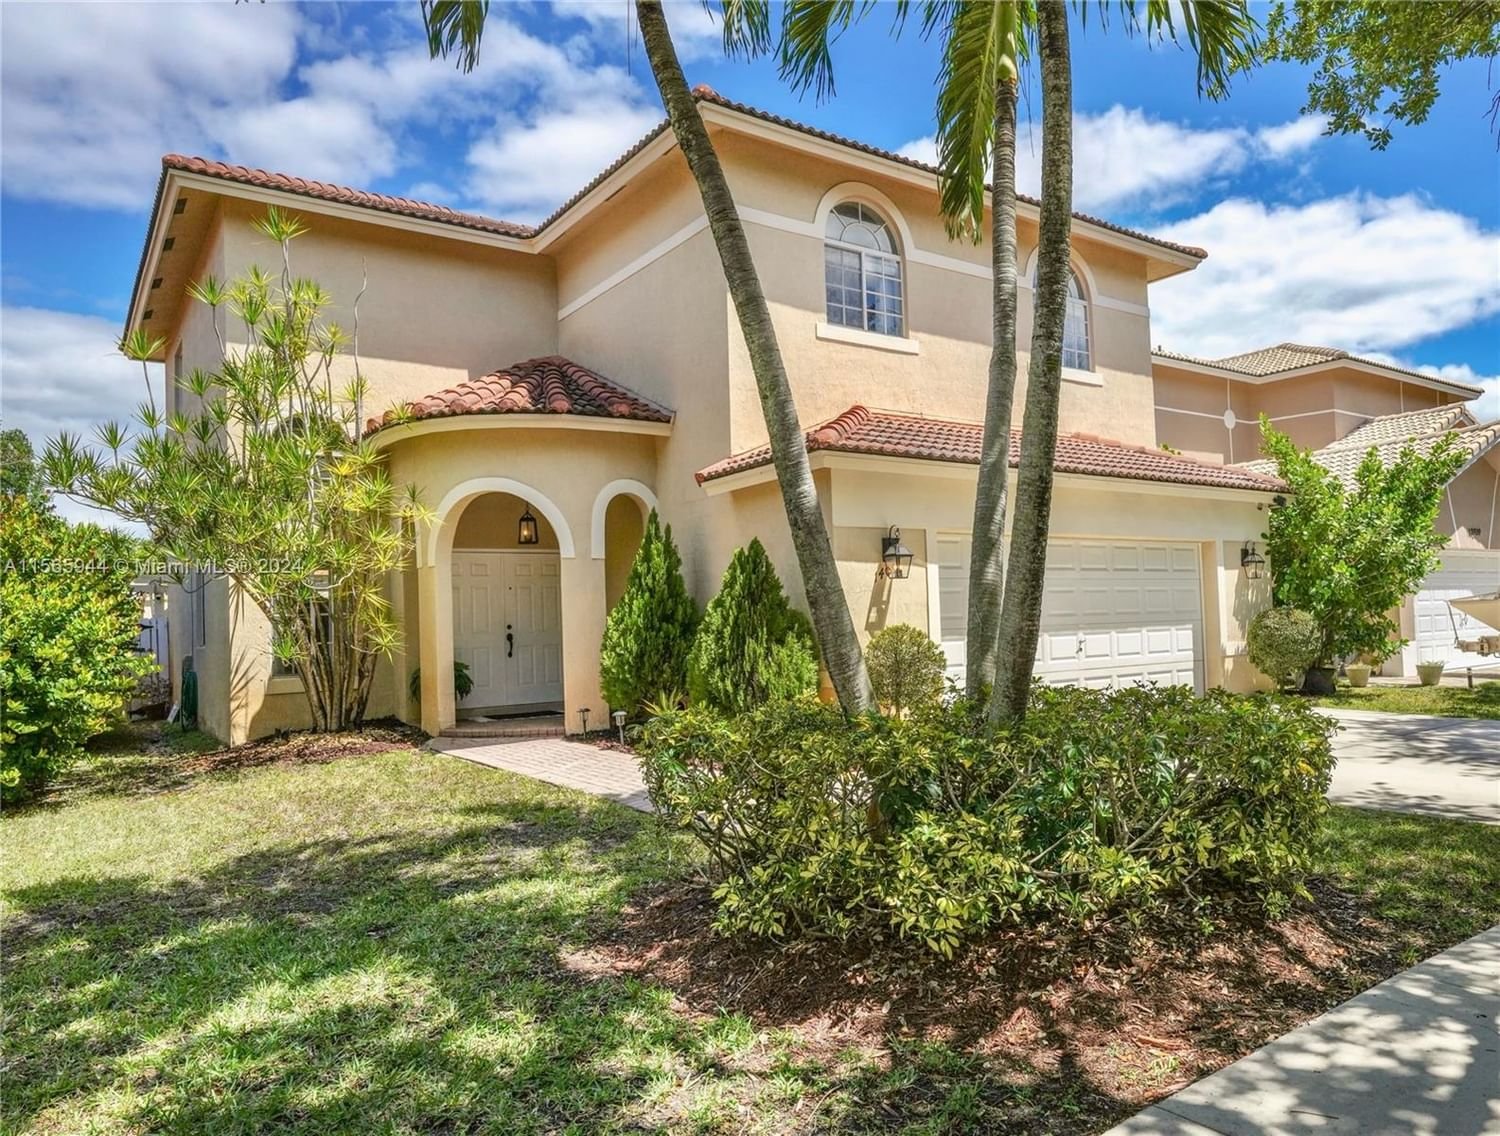 Real estate property located at 14051 32nd St, Broward County, POD 13 AT MONARCH LAKES, Miramar, FL